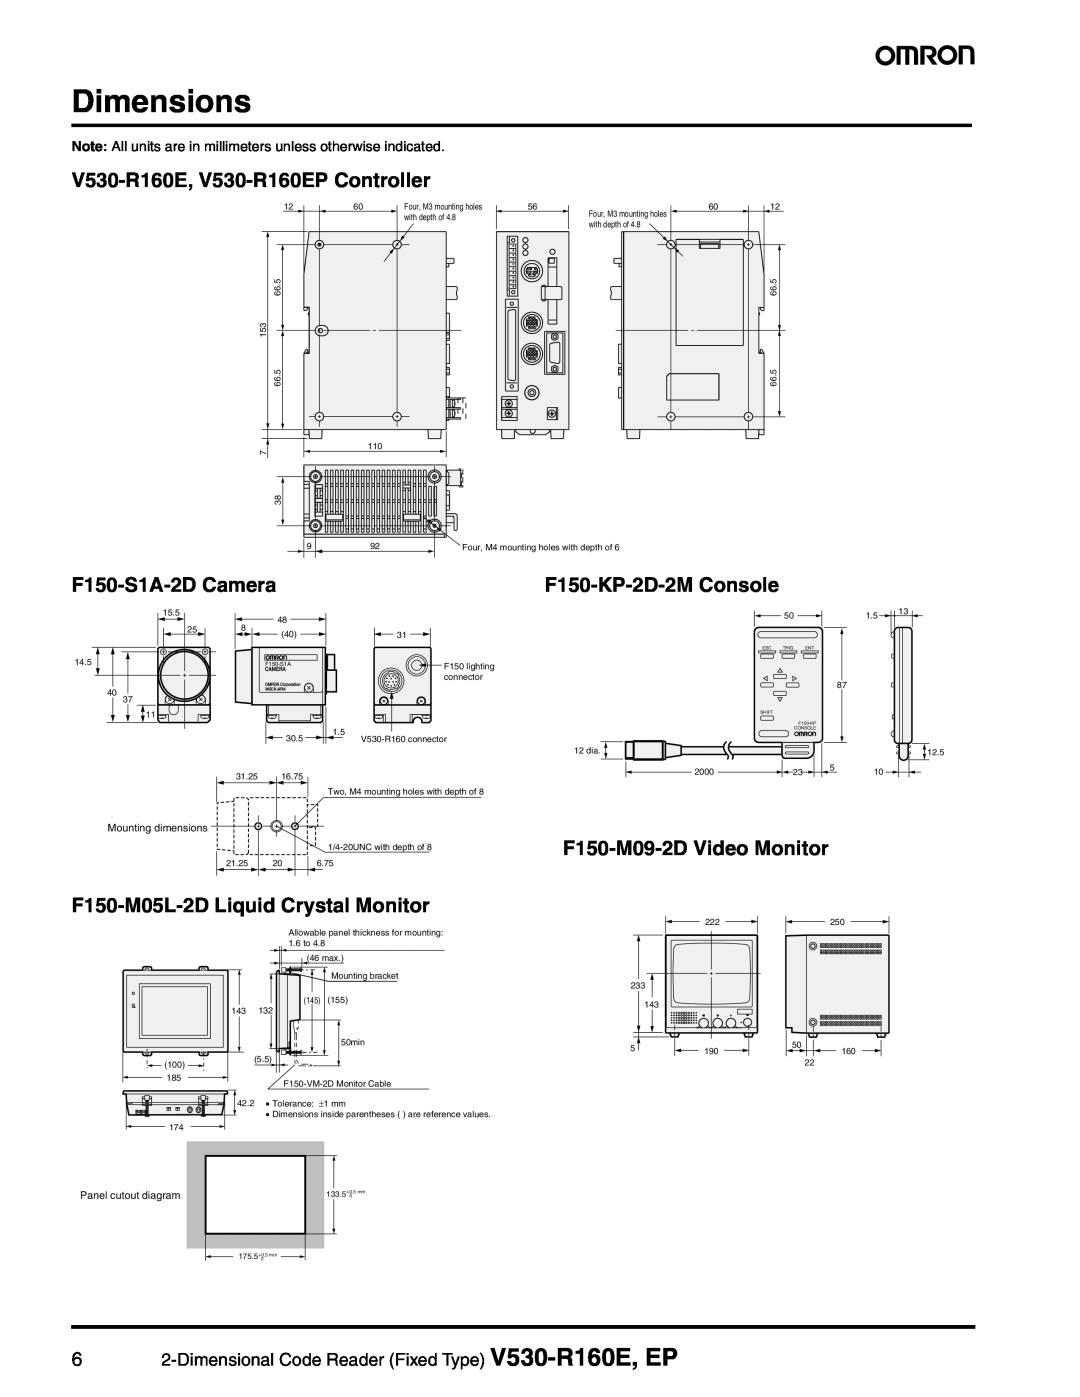 Omron manual F150-KP-2D-2M Console, F150-M05L-2D Liquid Crystal Monitor, V530-R160E, V530-R160EP Controller 